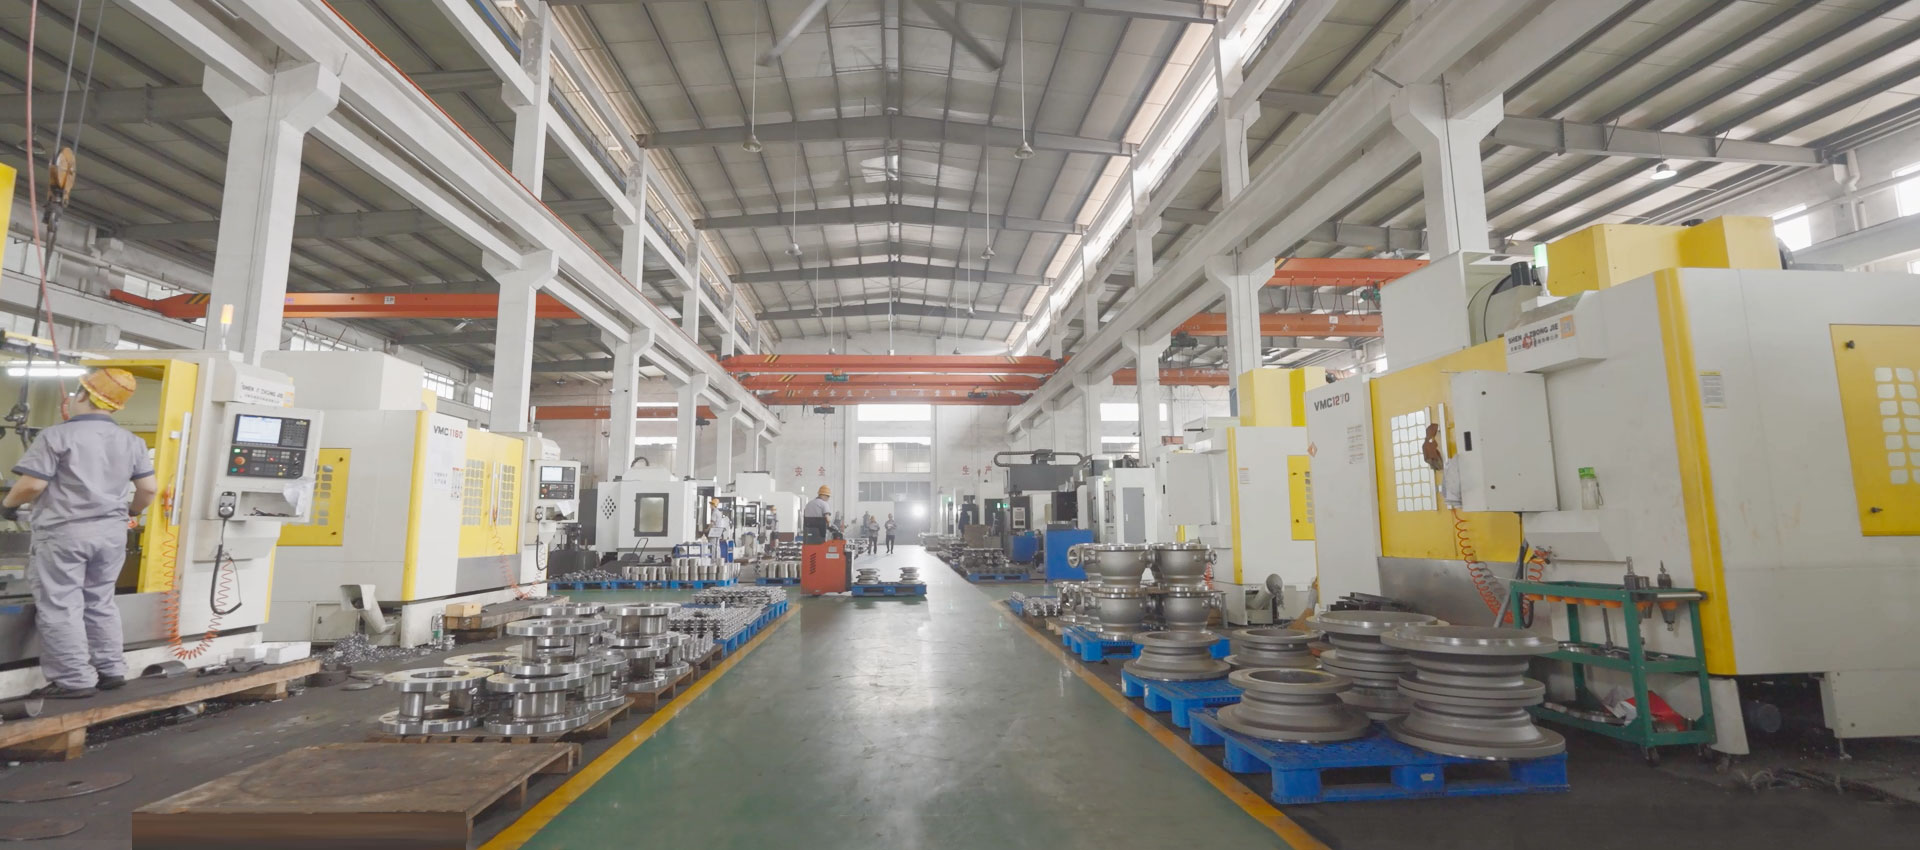 Tovarna ventilov Zhejiang Liangyi Valve Co., Ltd